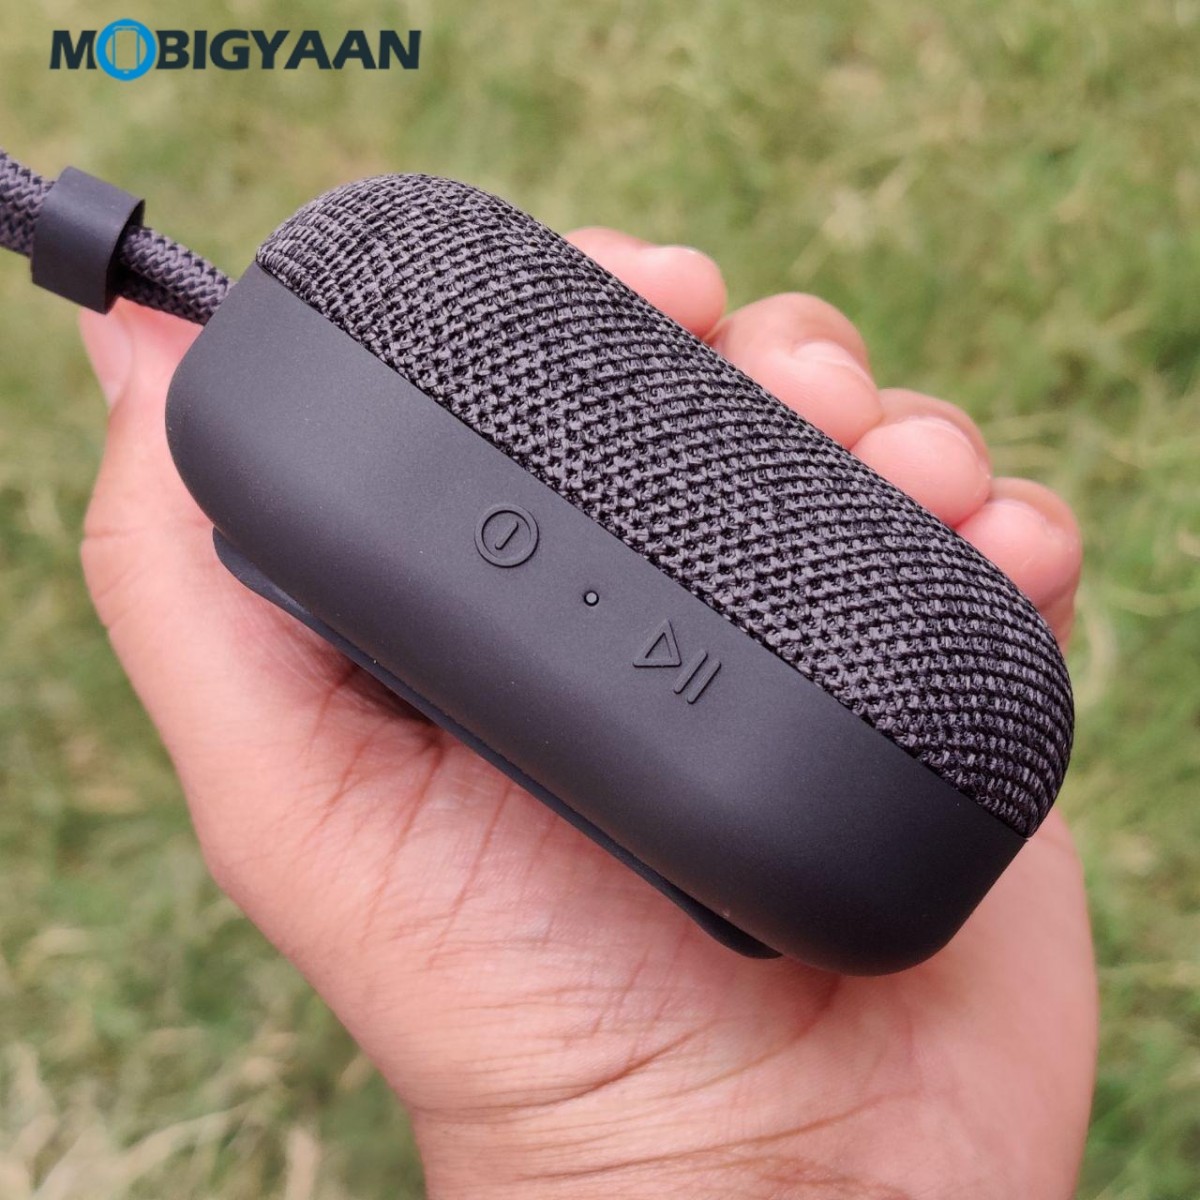 Mi Outdoor Bluetooth Speakers Hands On Review 5